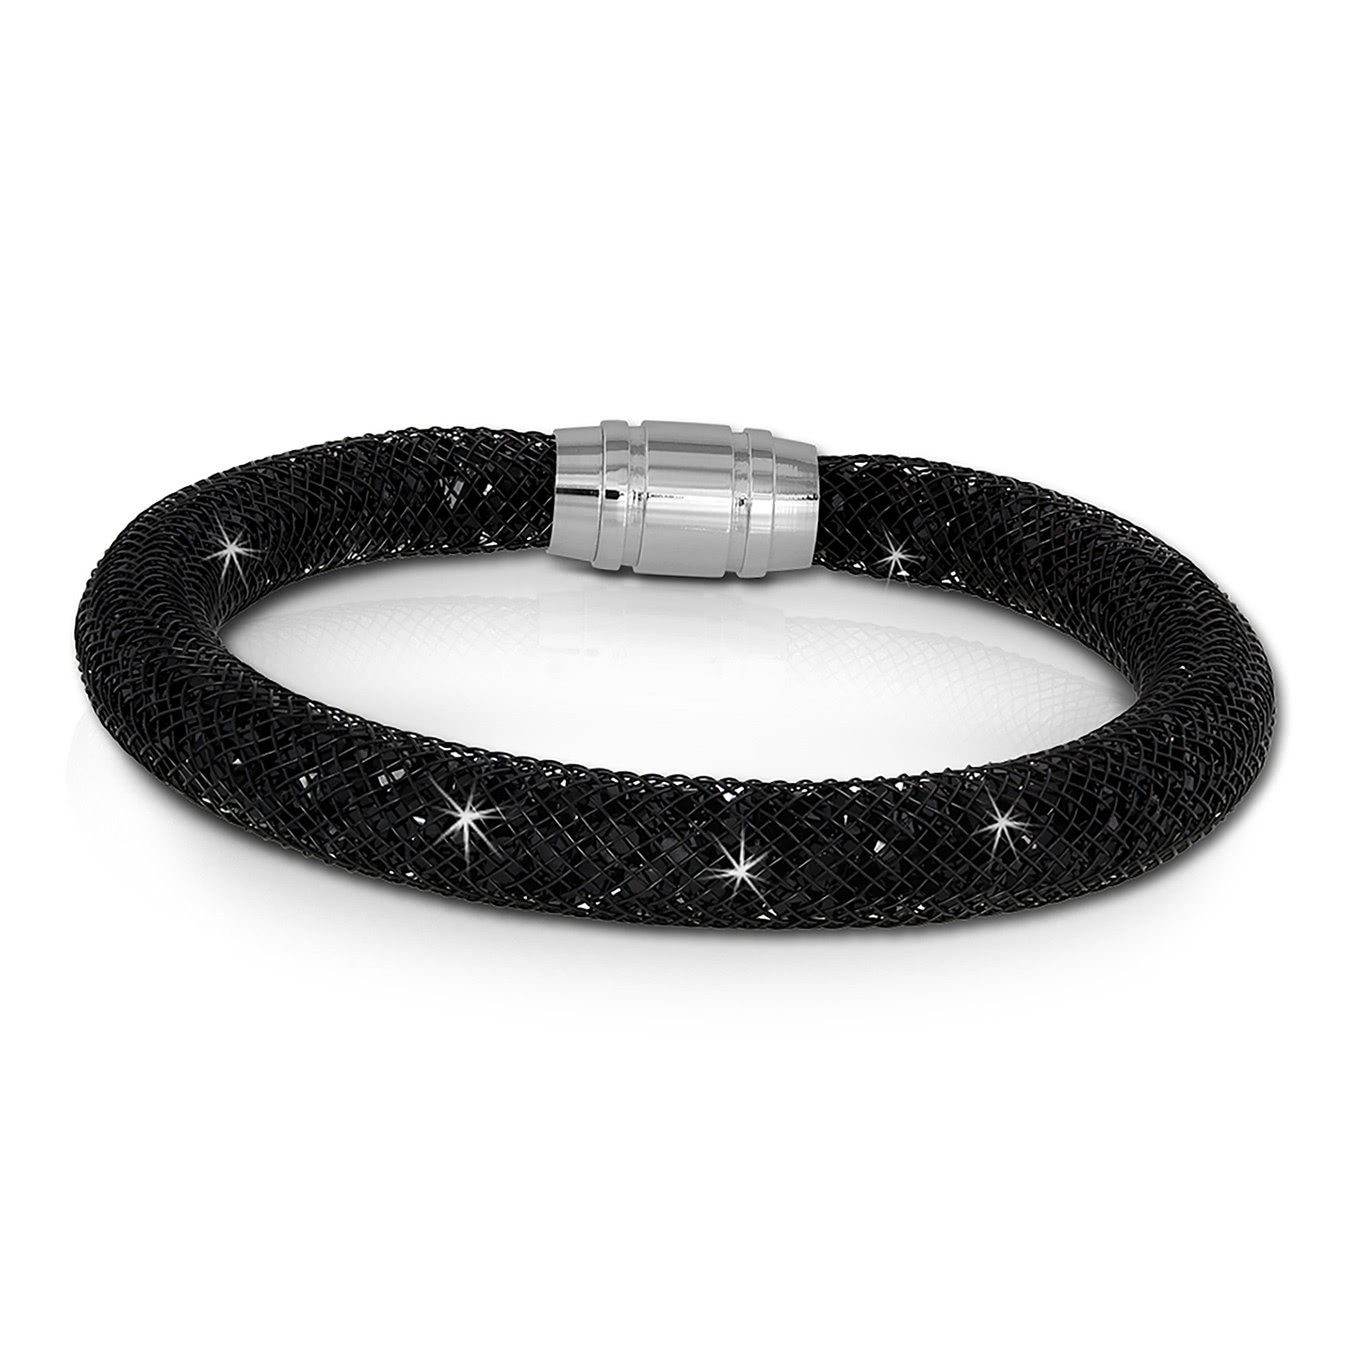 SilberDream Edelstahlarmband SilberDream Armband schwarz Arm-Schmuck (Armband), Damenarmband mit Edelstahl-Verschluss, Farbe: schwarz